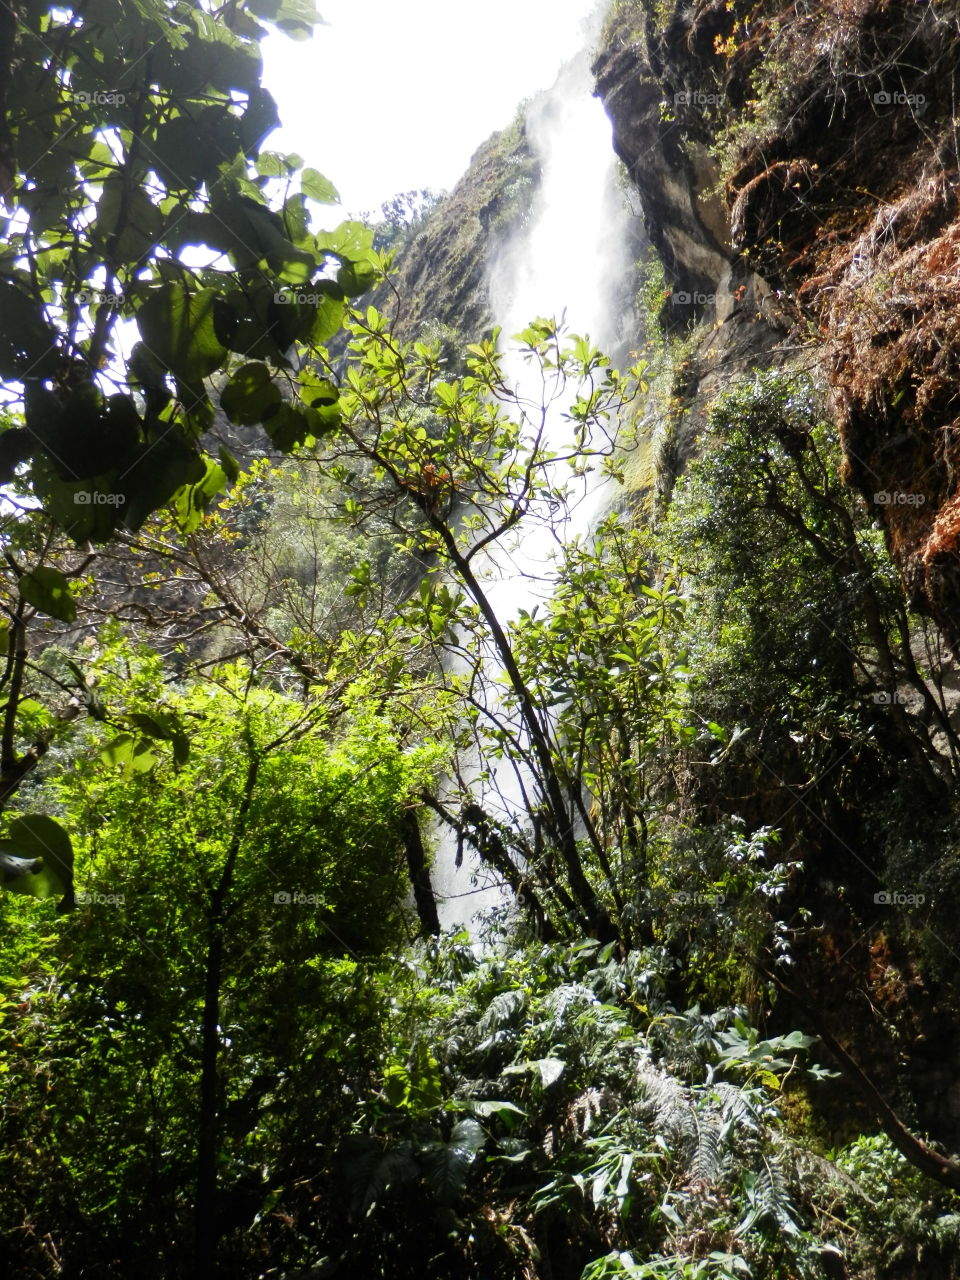 El chorro de Giron Waterfall
Ecuador